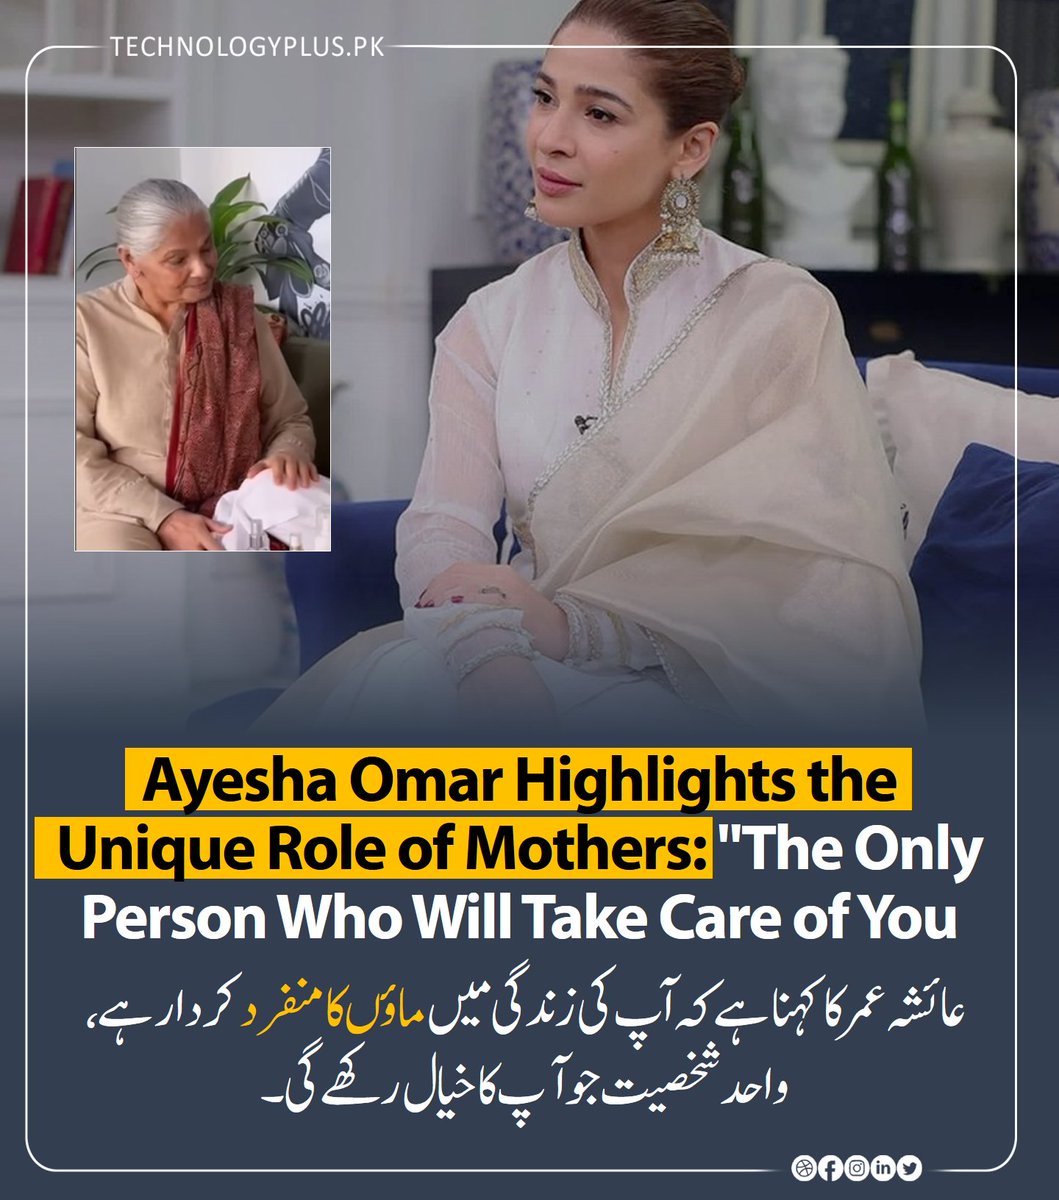 Ayesha Omar Highlights the Unique Role of Mothers: 'The Only Person Who Will Take Care of You
Read more : t.ly/NJzRQ
.
.
#AyeshaOmar
#PakistaniActress
#FashionIcon
#StyleDiva
#AyeshaOmarFans
#CelebrityLife
#ActressLife
#GlamourousLife
#AyeshaOmarUpdates
#ShowbizLife